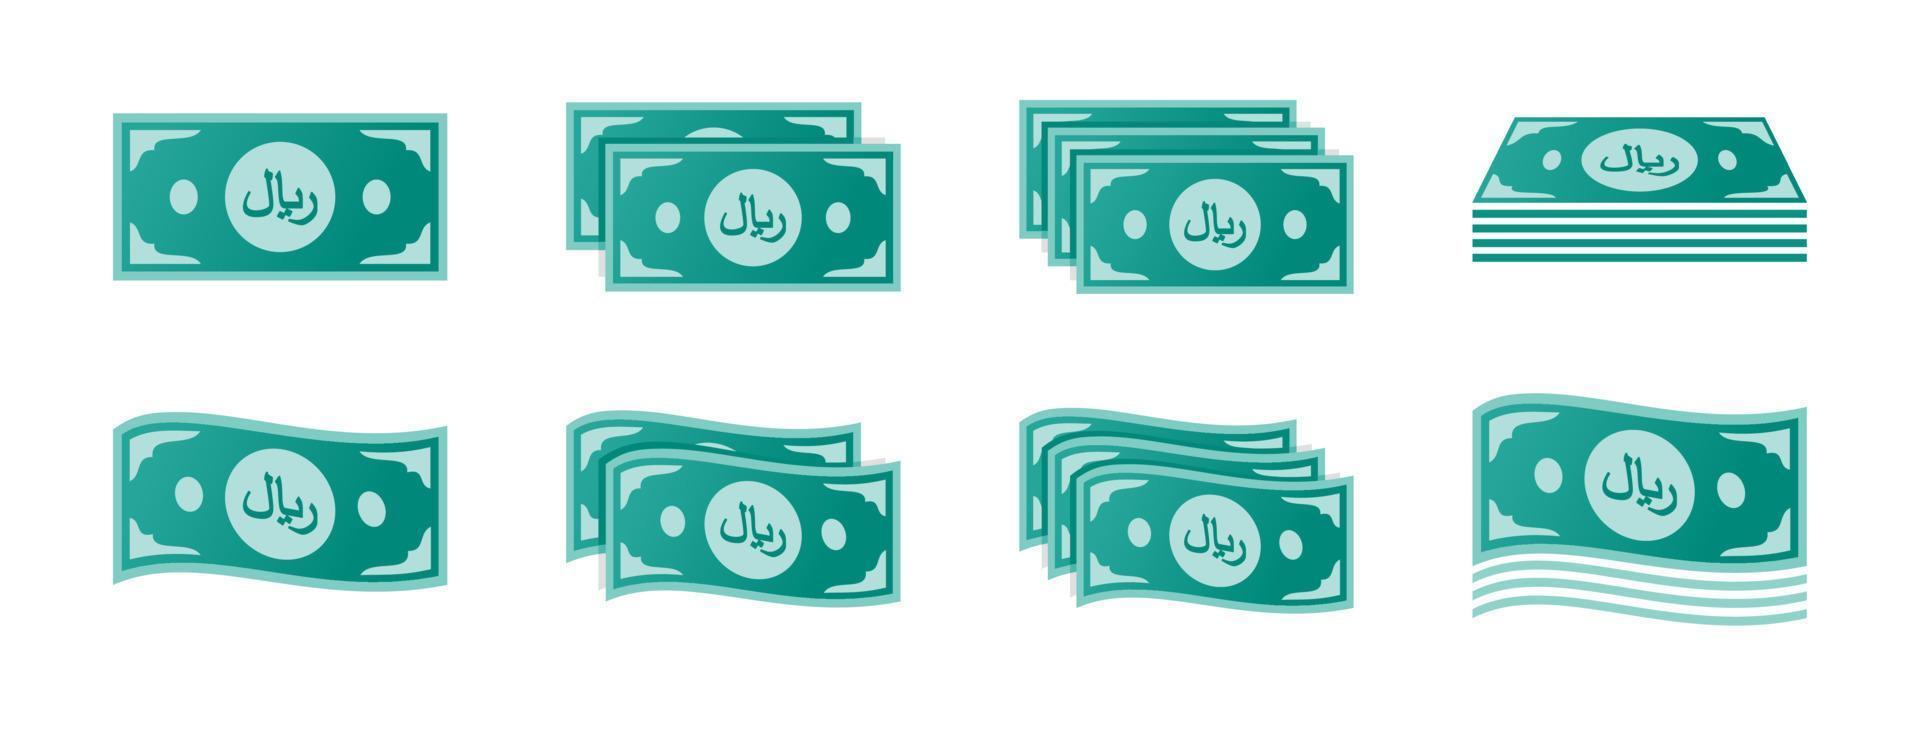 Symbolsatz für saudi-riyal-Banknoten vektor